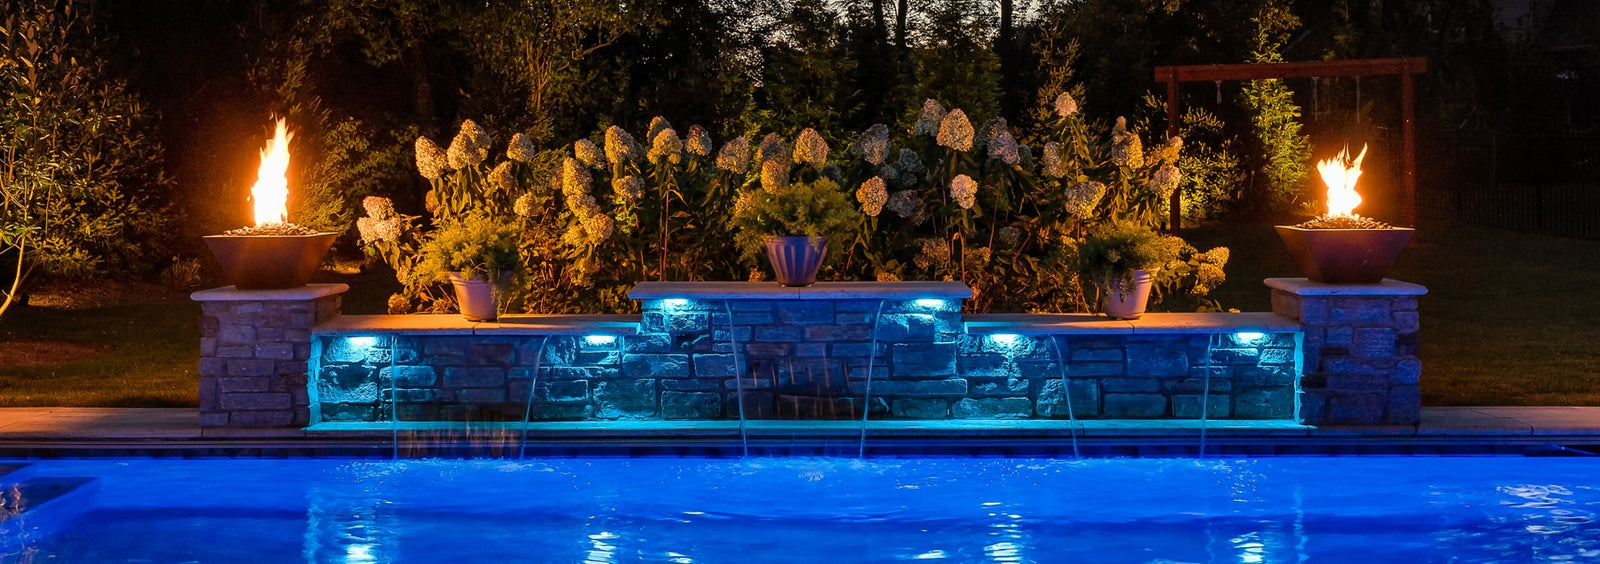 hardscape lighting on outdoor pool